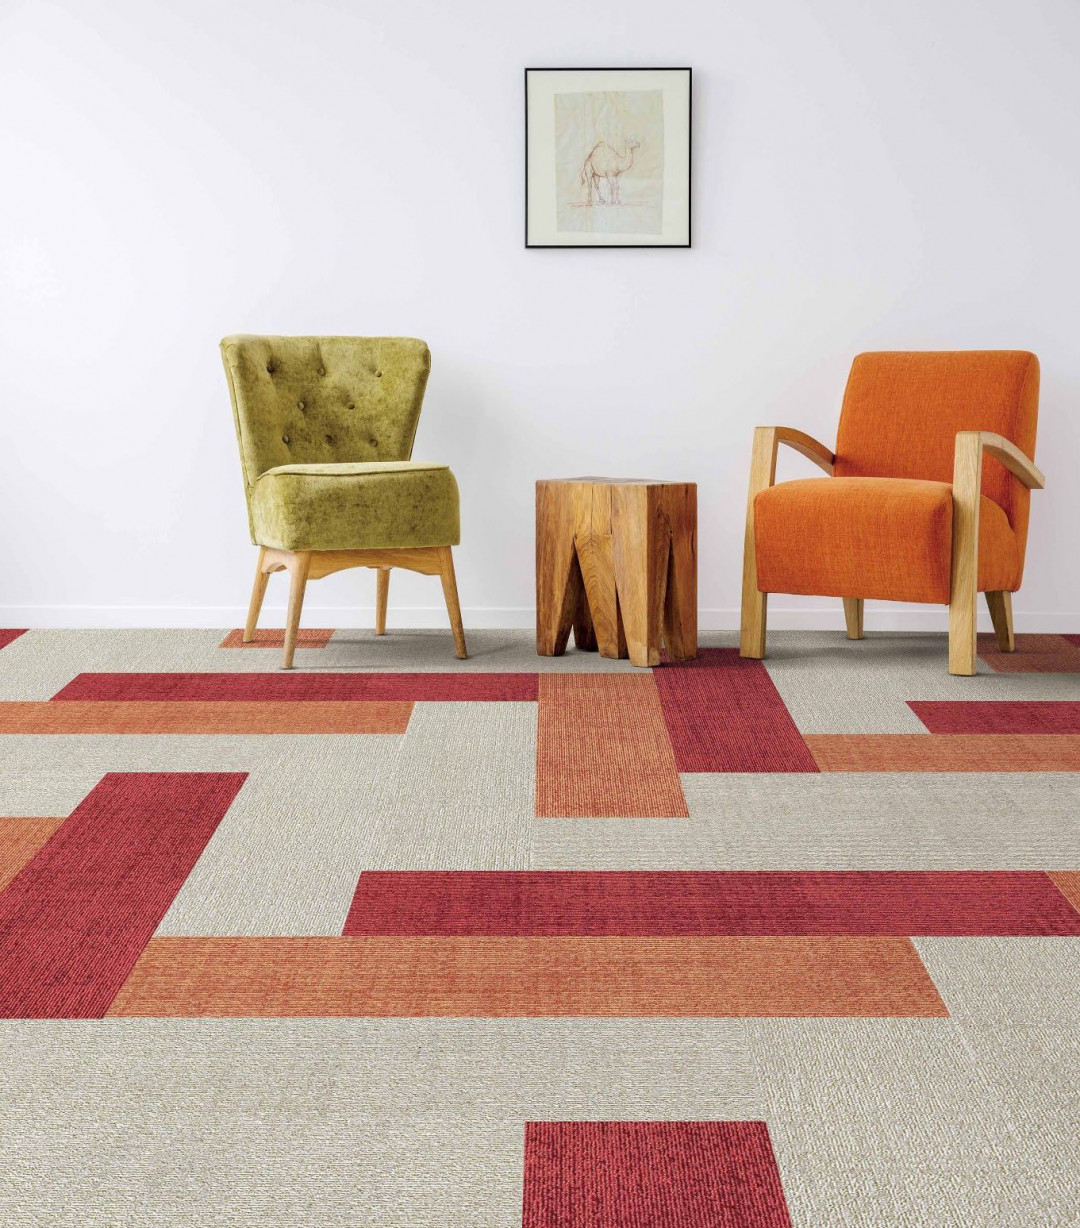 Why Carpet Tiles?